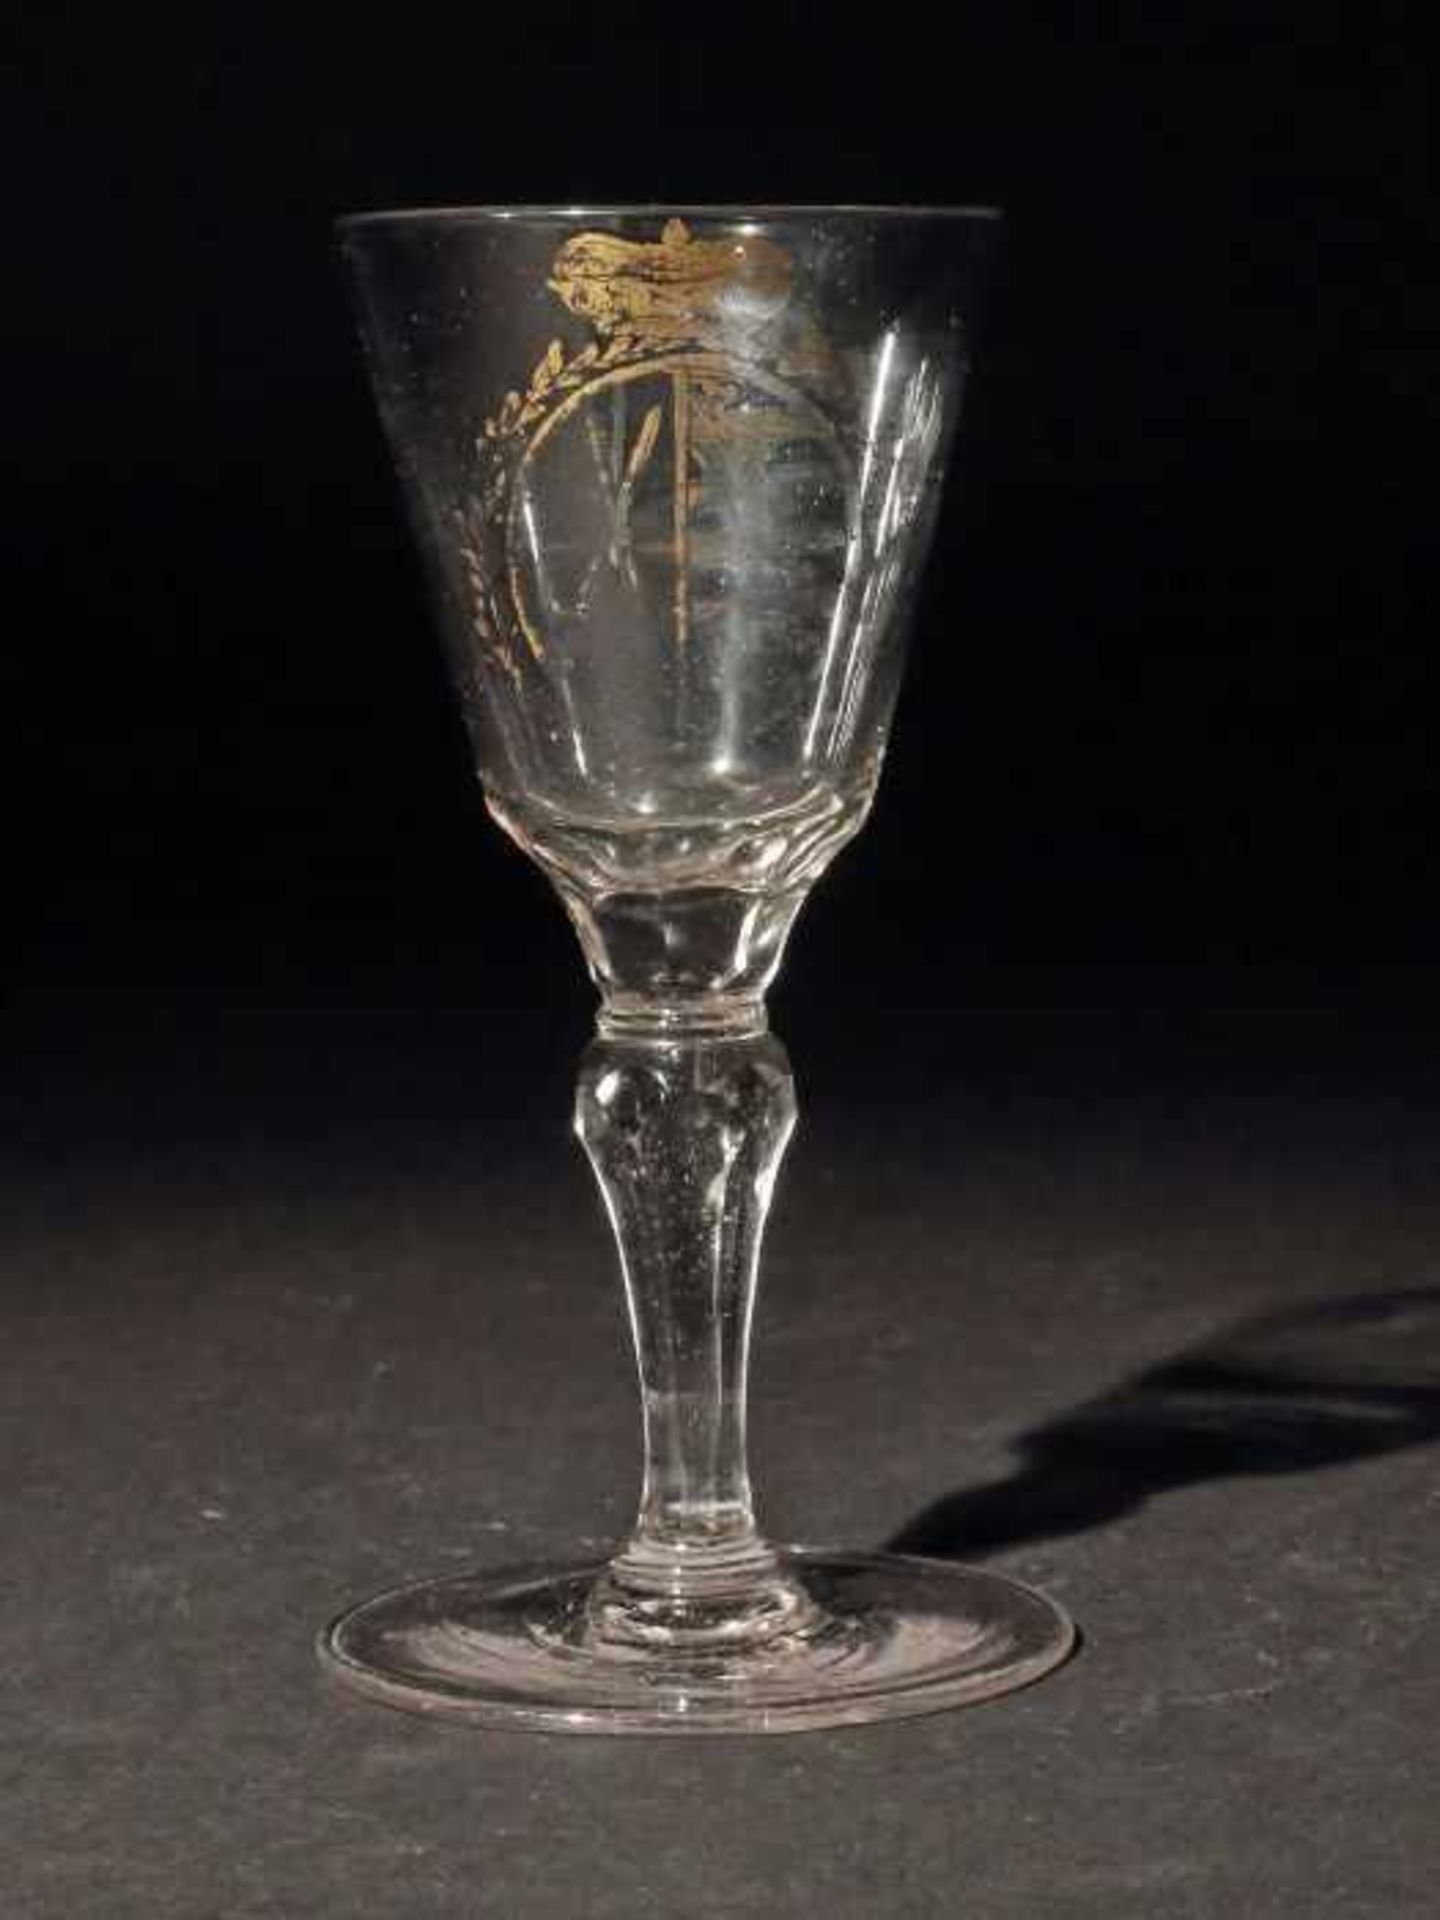 Kleiner Wappenpokal Böhmen, 2. Drittel 18. Jh., farbloses Glas, flacher Scheibenfuß, sechsfach